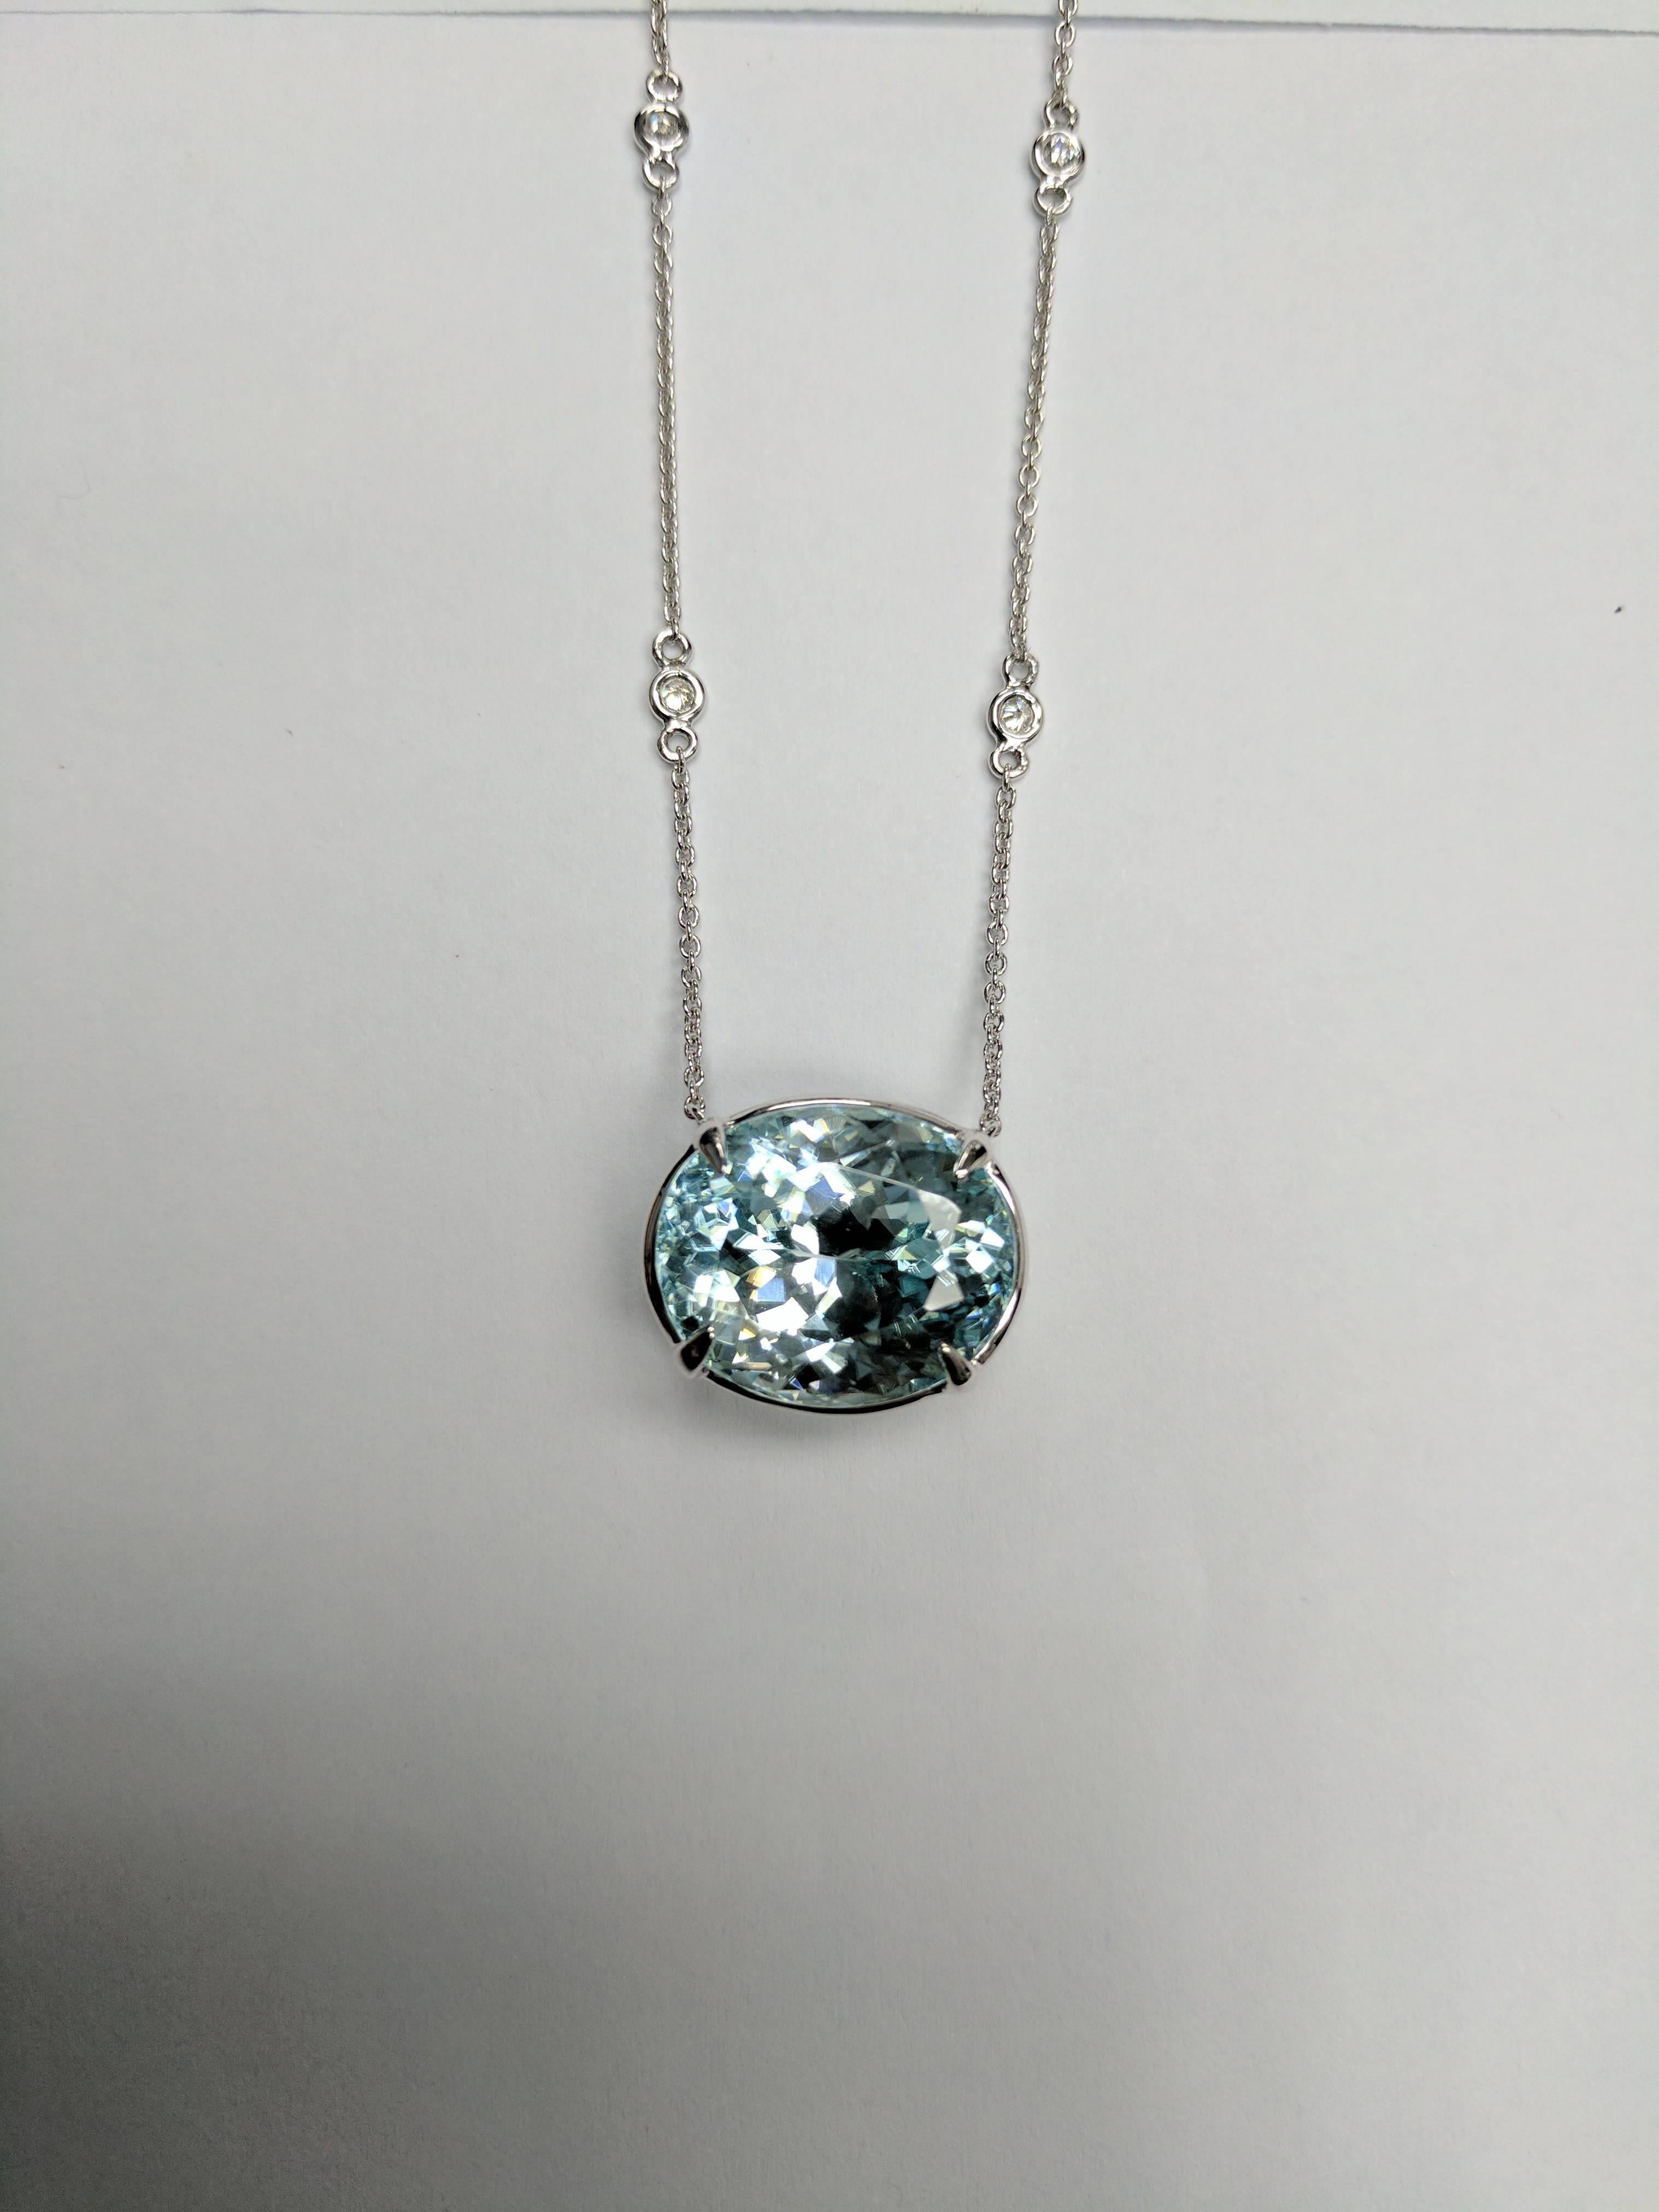 Women's or Men's Frederic Sage 25.54 Carat Blue Zircon Diamond and Pendant Necklace